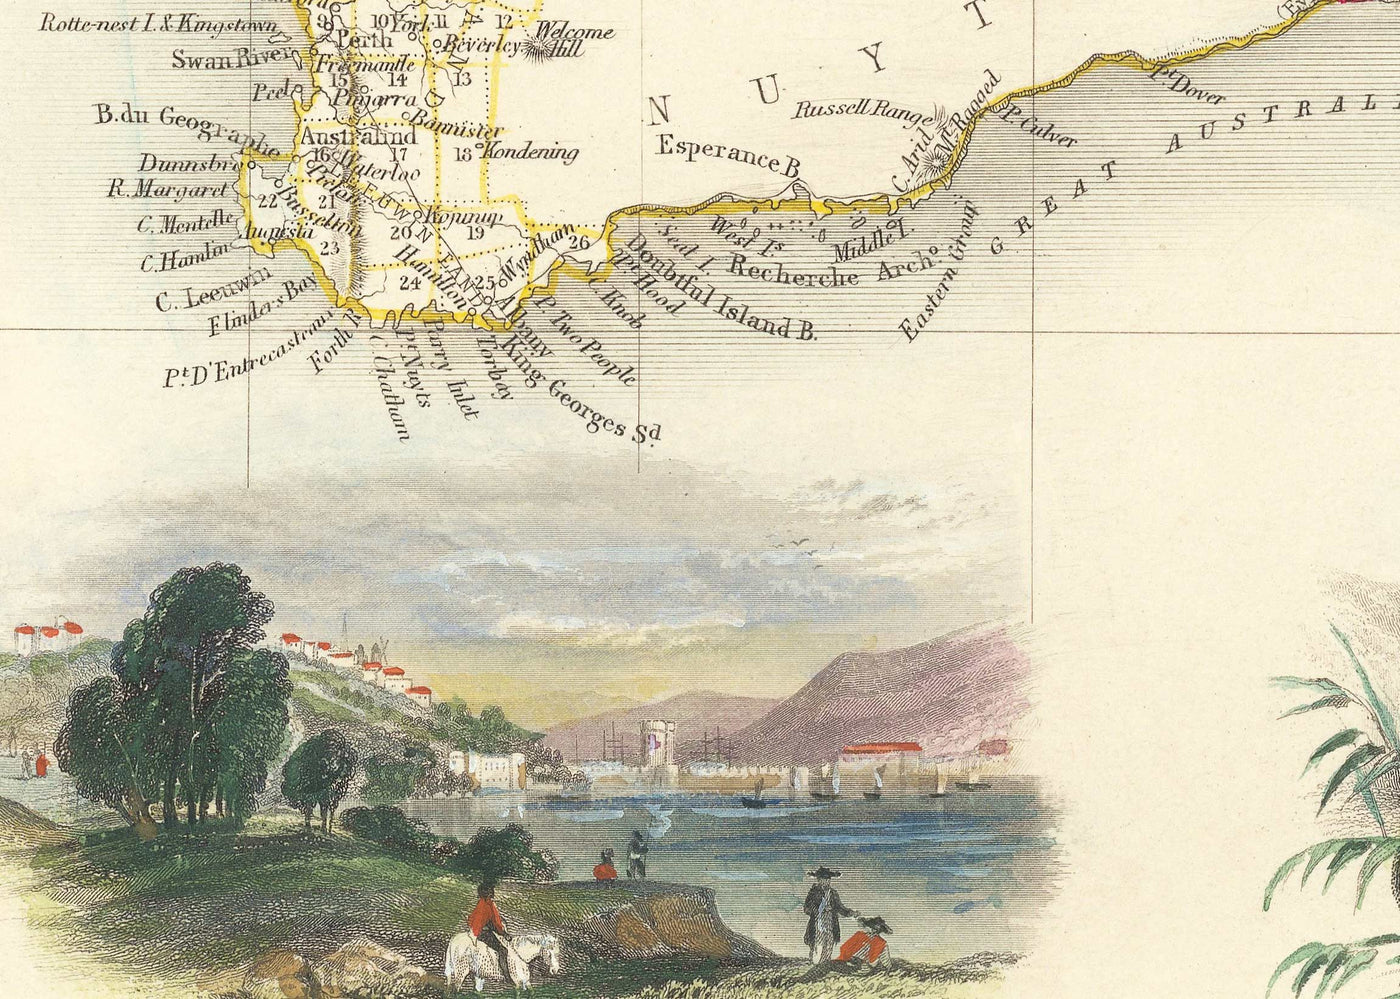 Old Map of Australia and Tasmania, 1851, by Tallis & Rapkin - Sydney, Melbourne, Perth